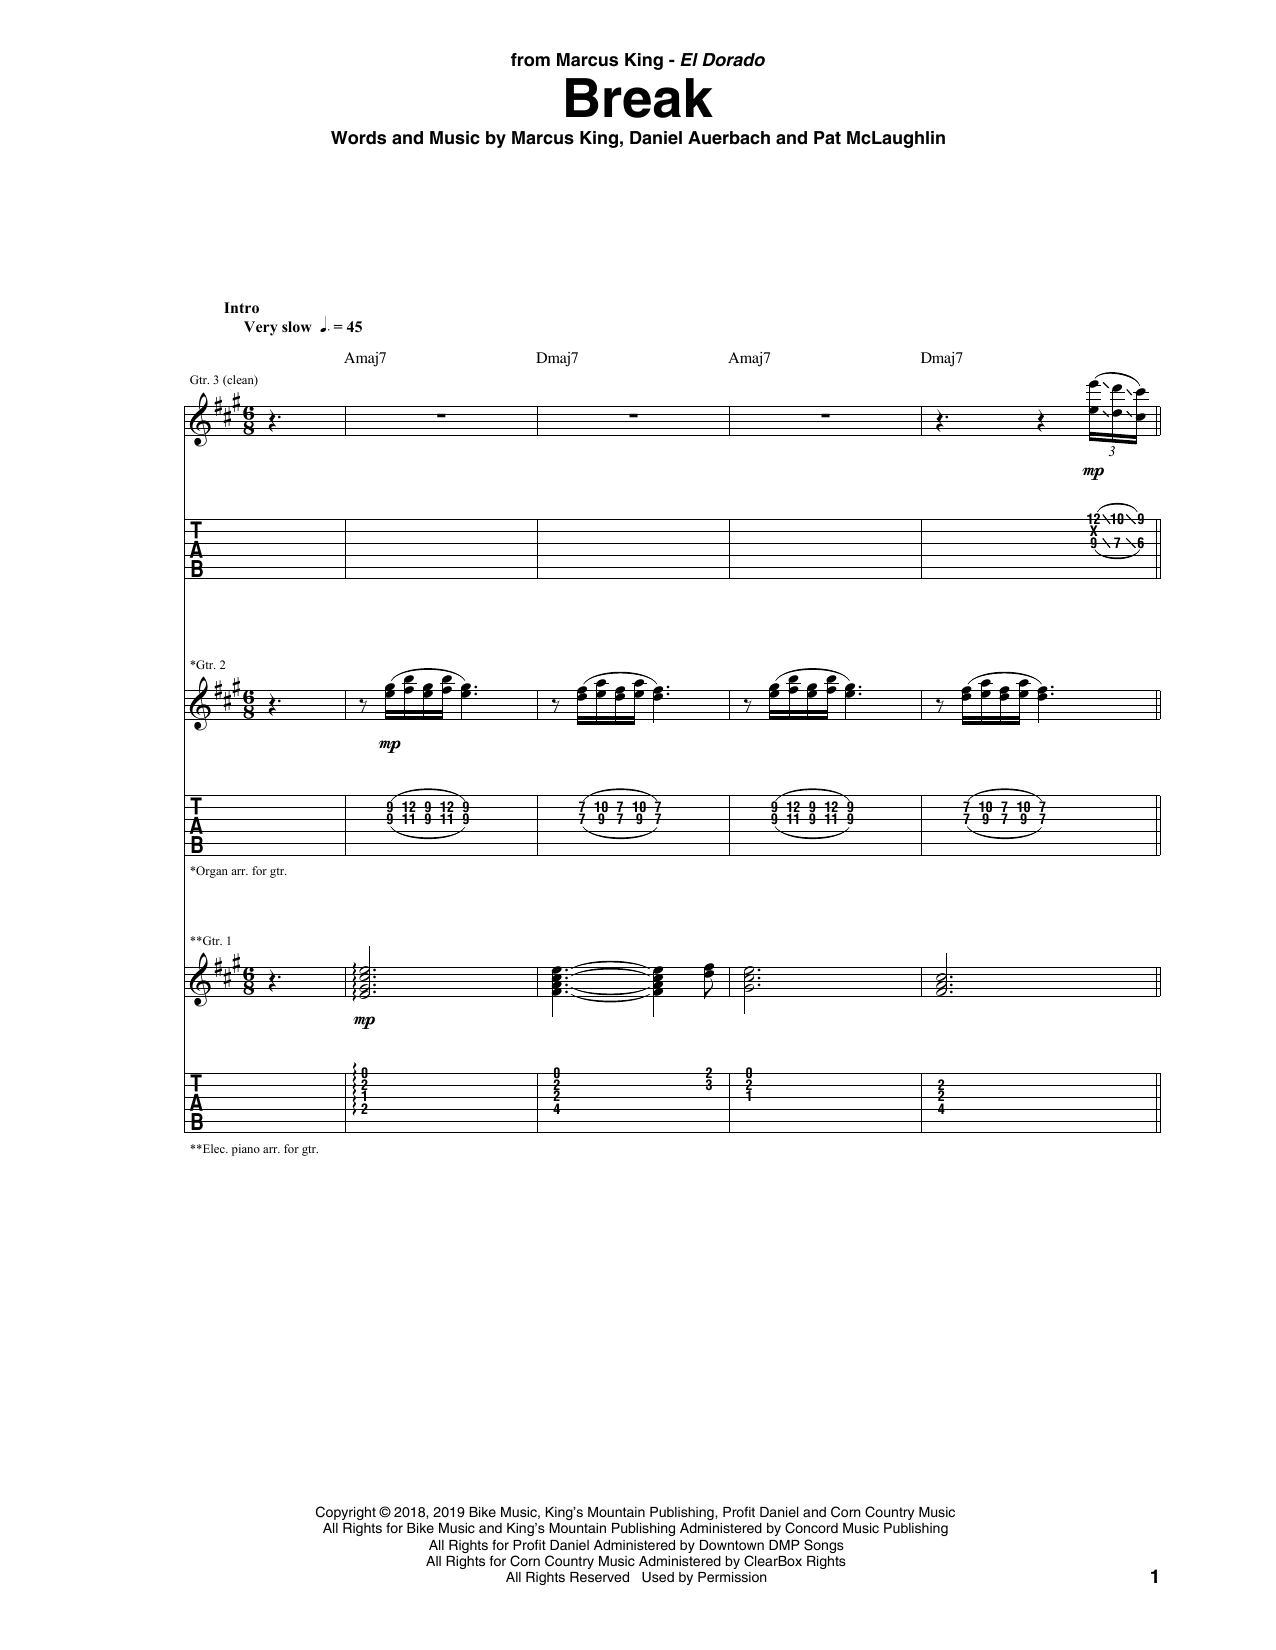 Marcus King Break Sheet Music Notes & Chords for Guitar Tab - Download or Print PDF